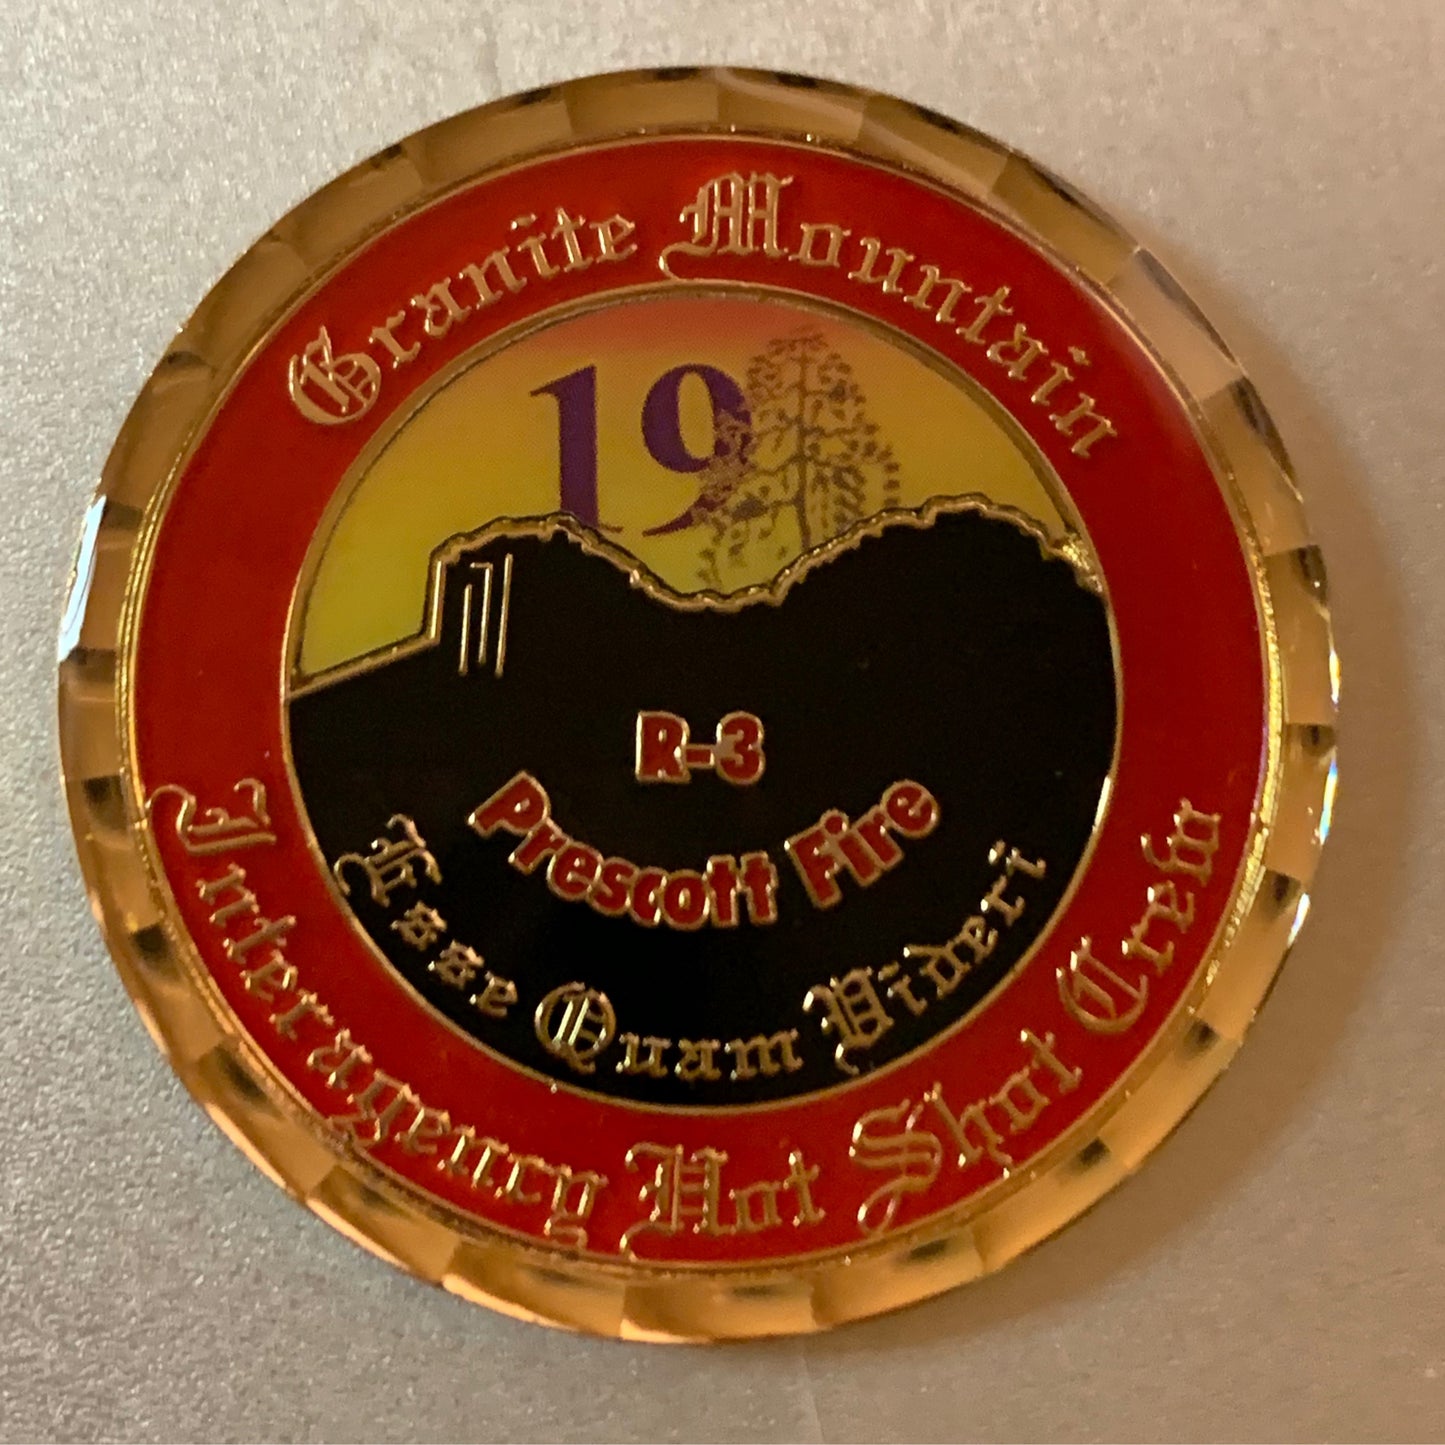 Granite Mountain 19 Memorial Challenge Coins